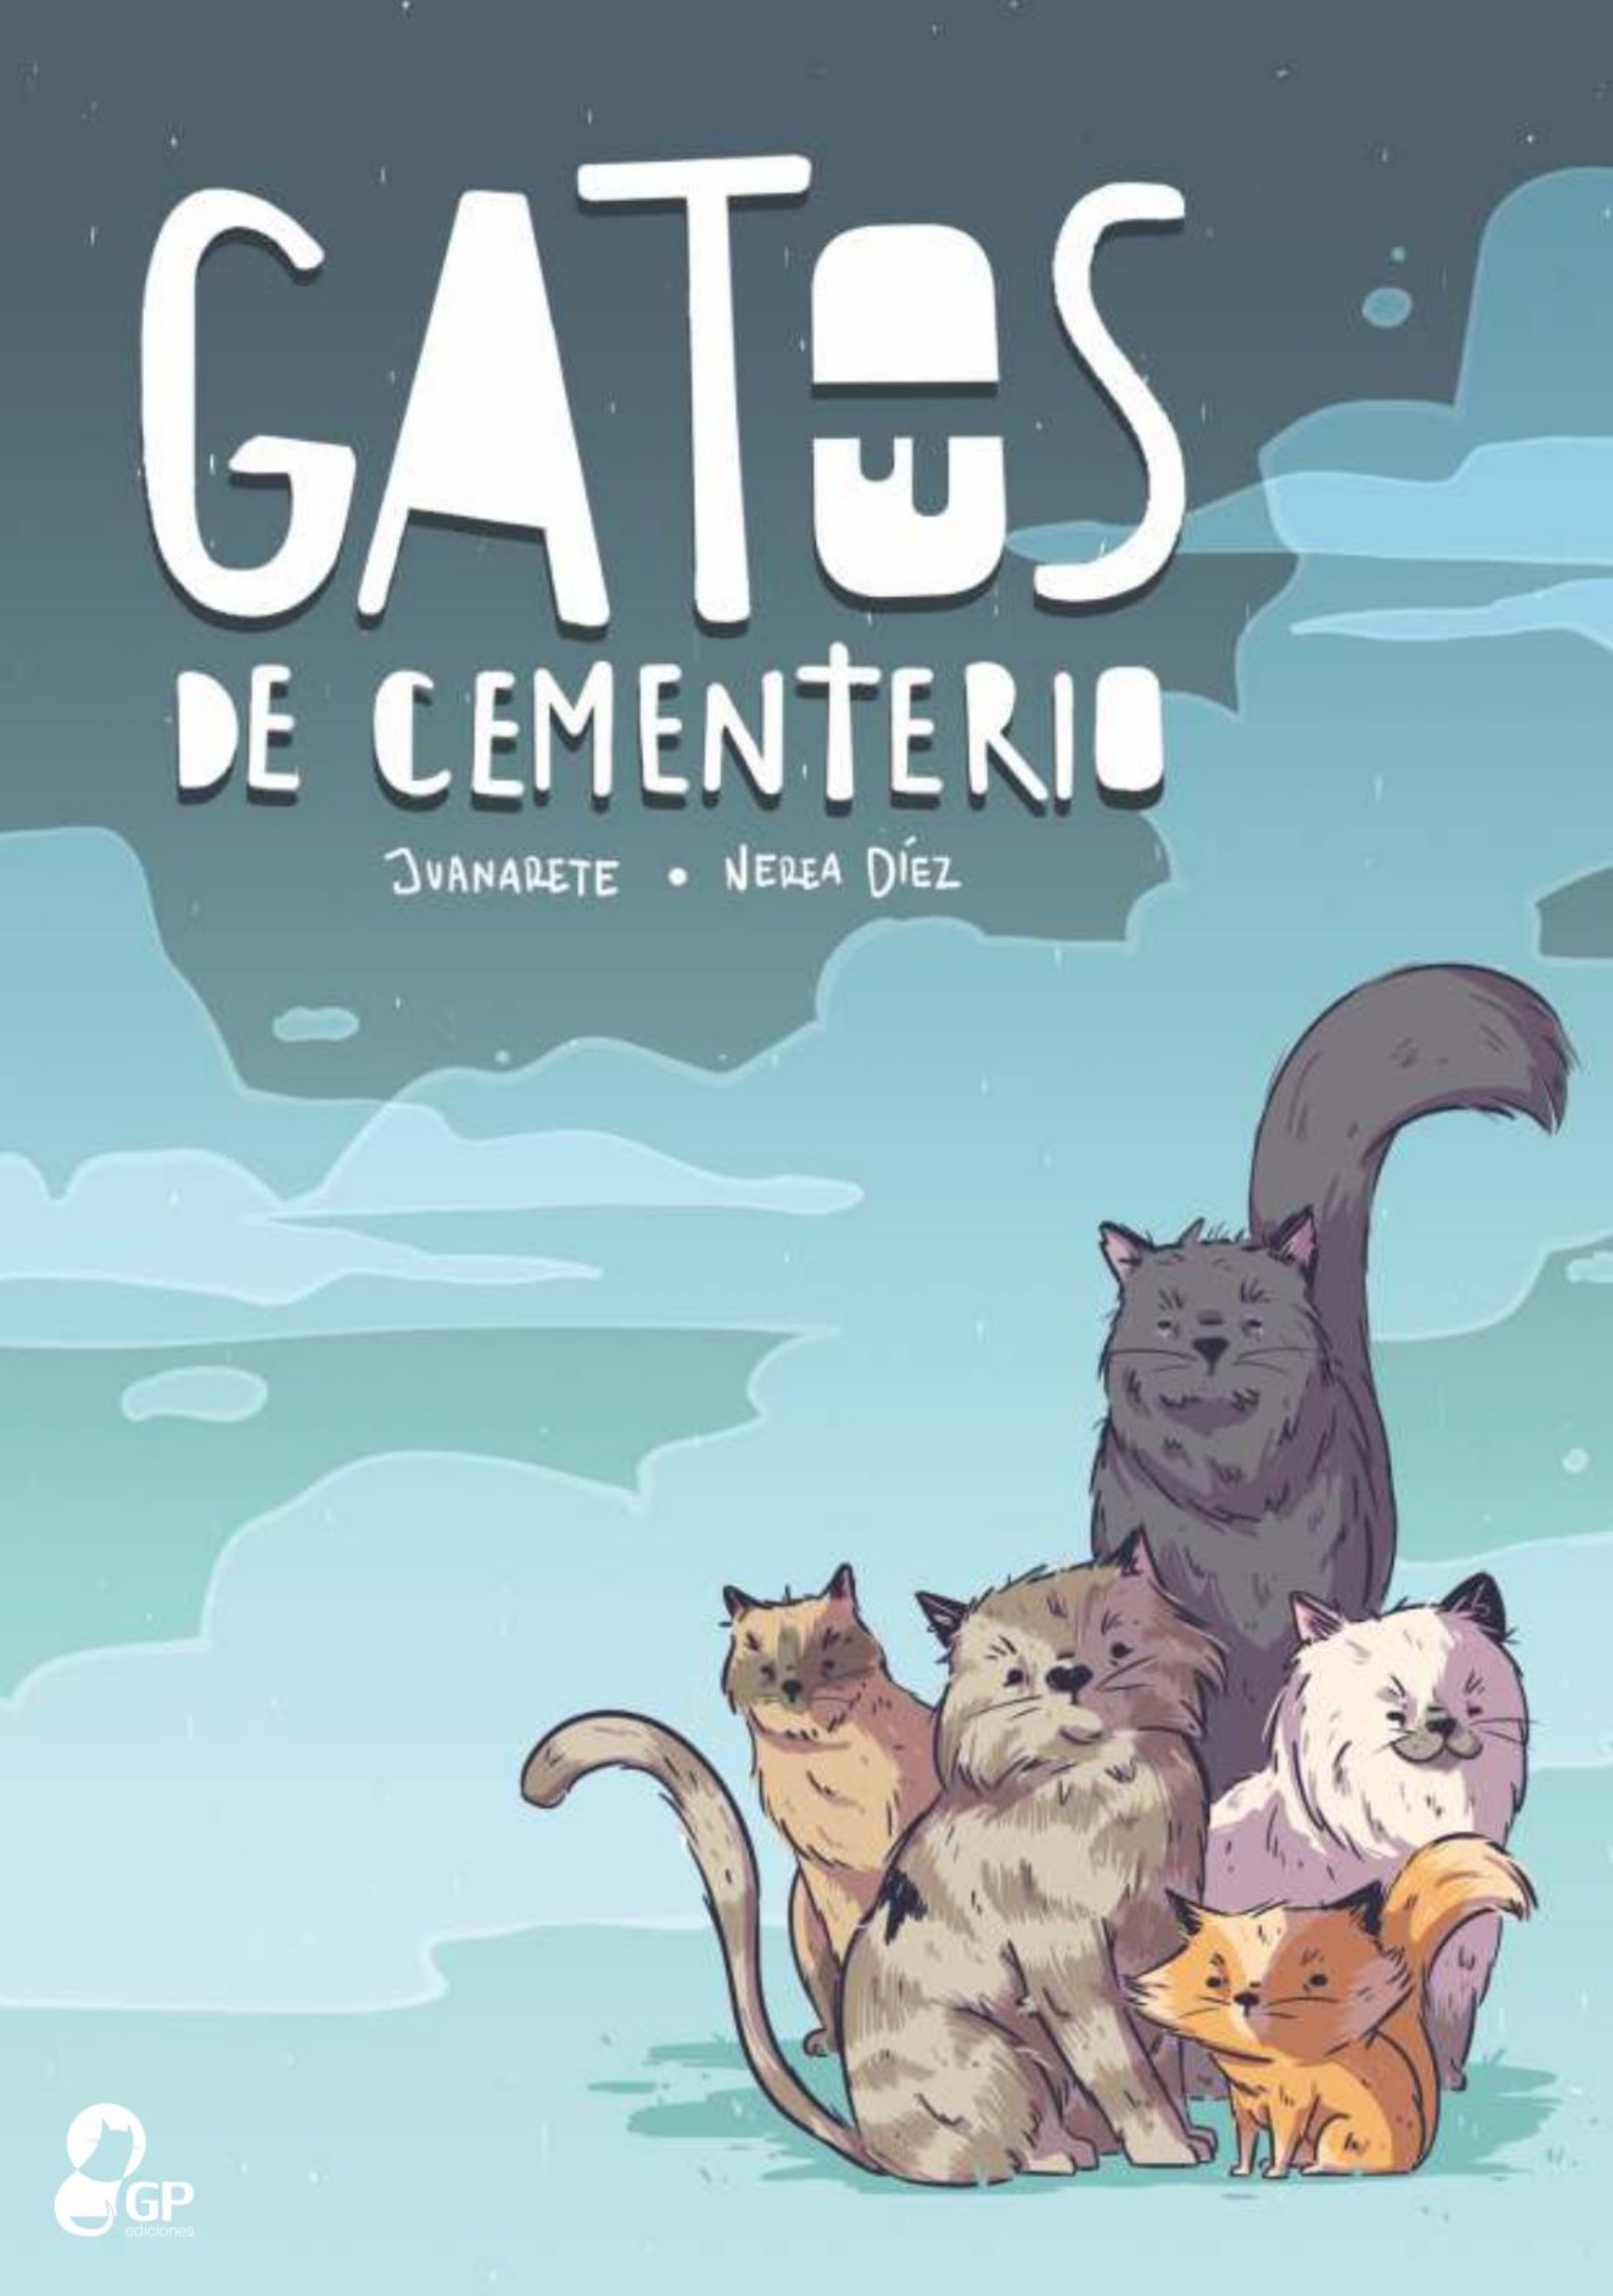 Gatos de cementerio - Juanarete | Nerea Díez